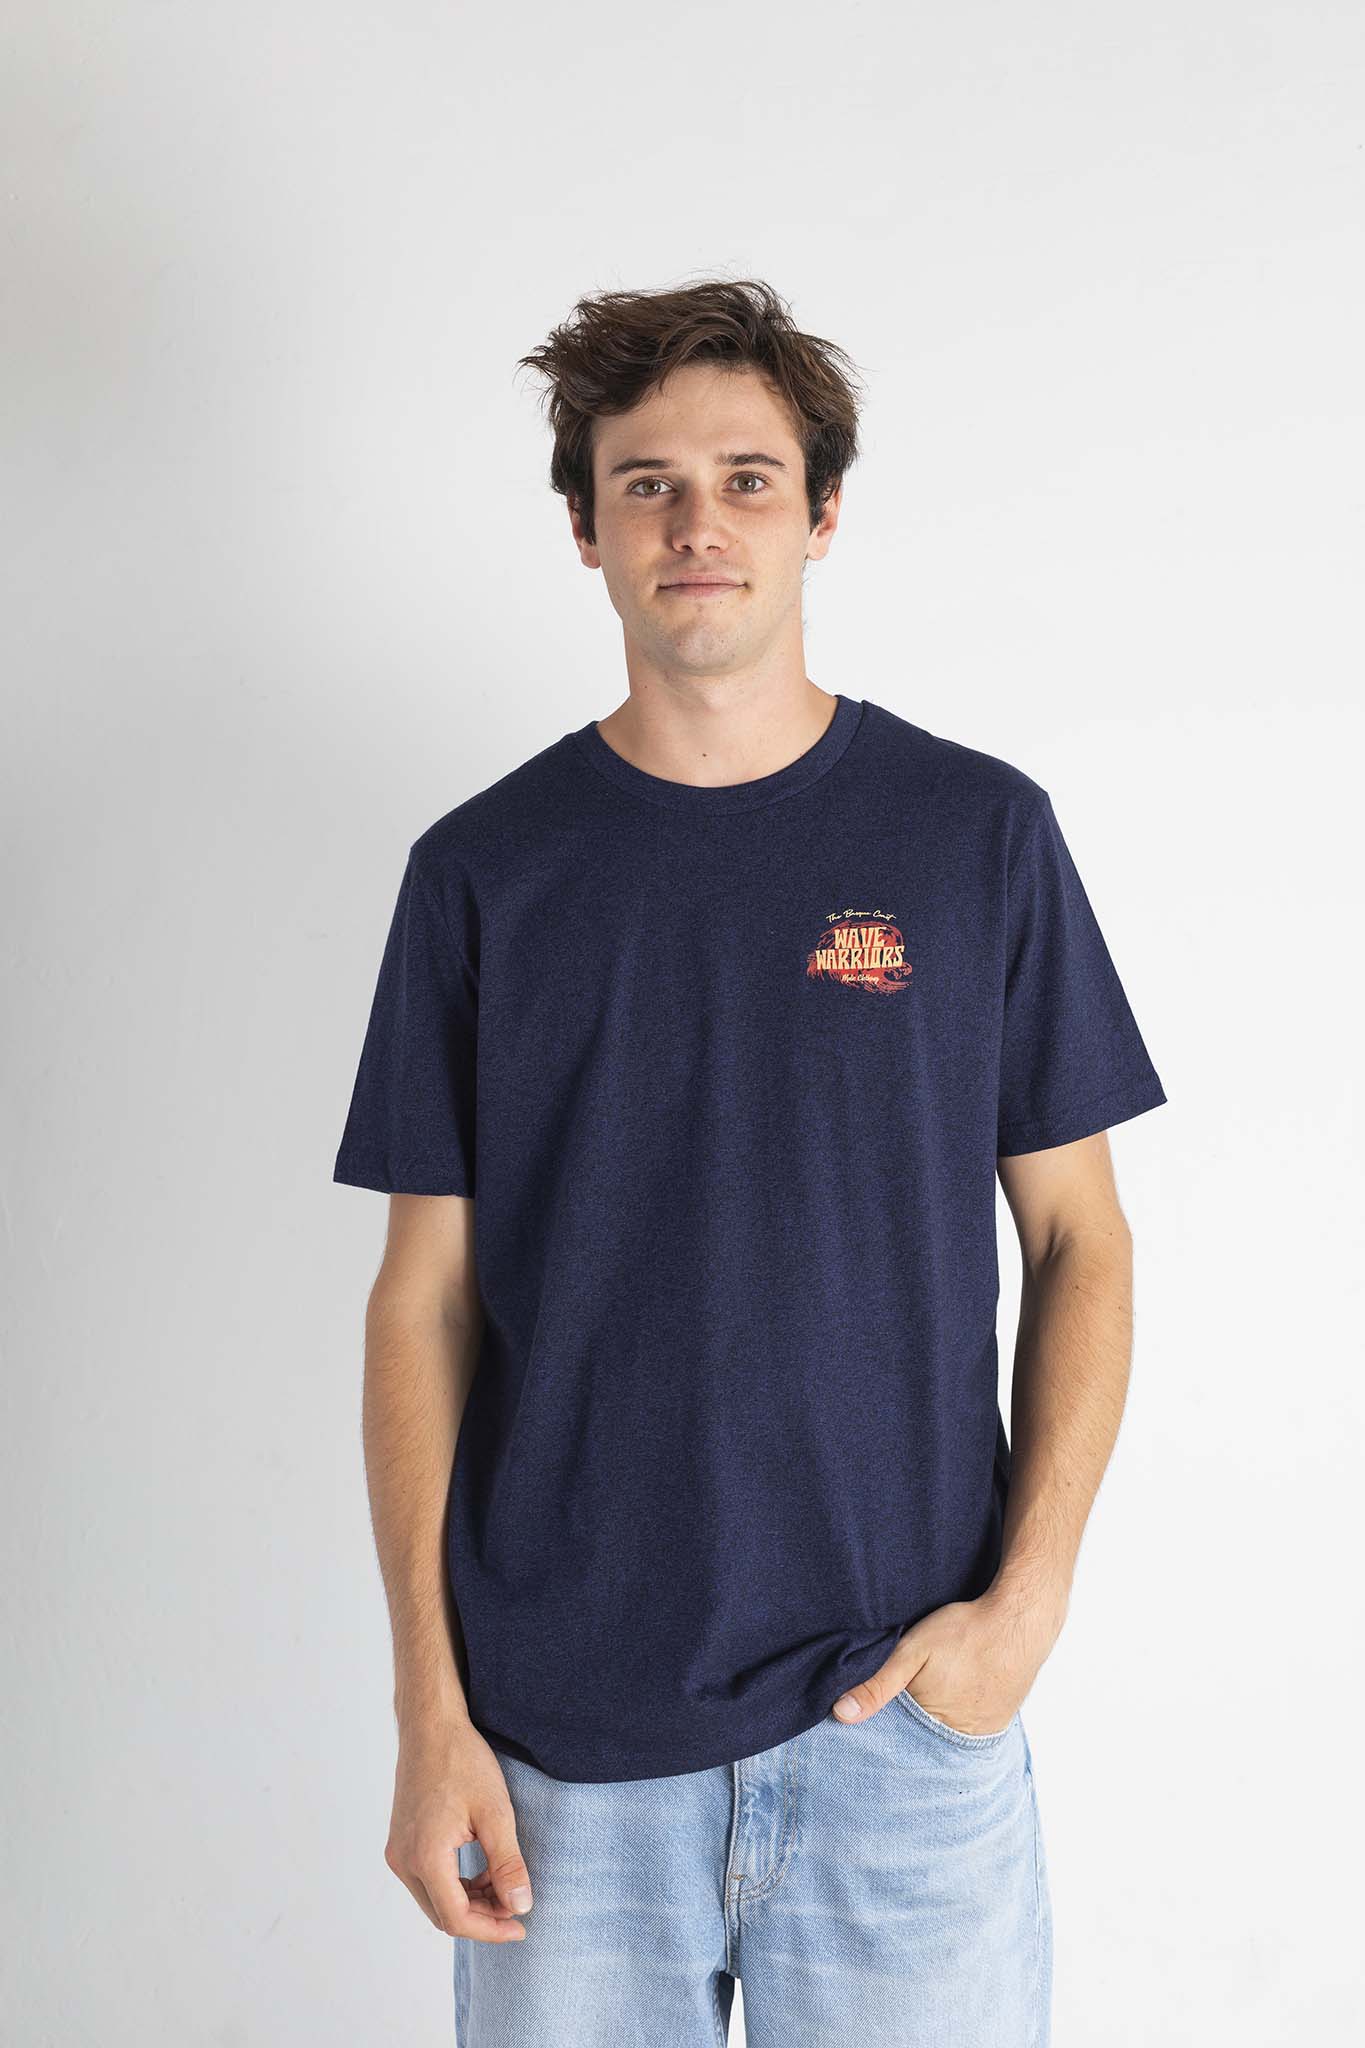 Camiseta WAVE WARRIORS mellange marino